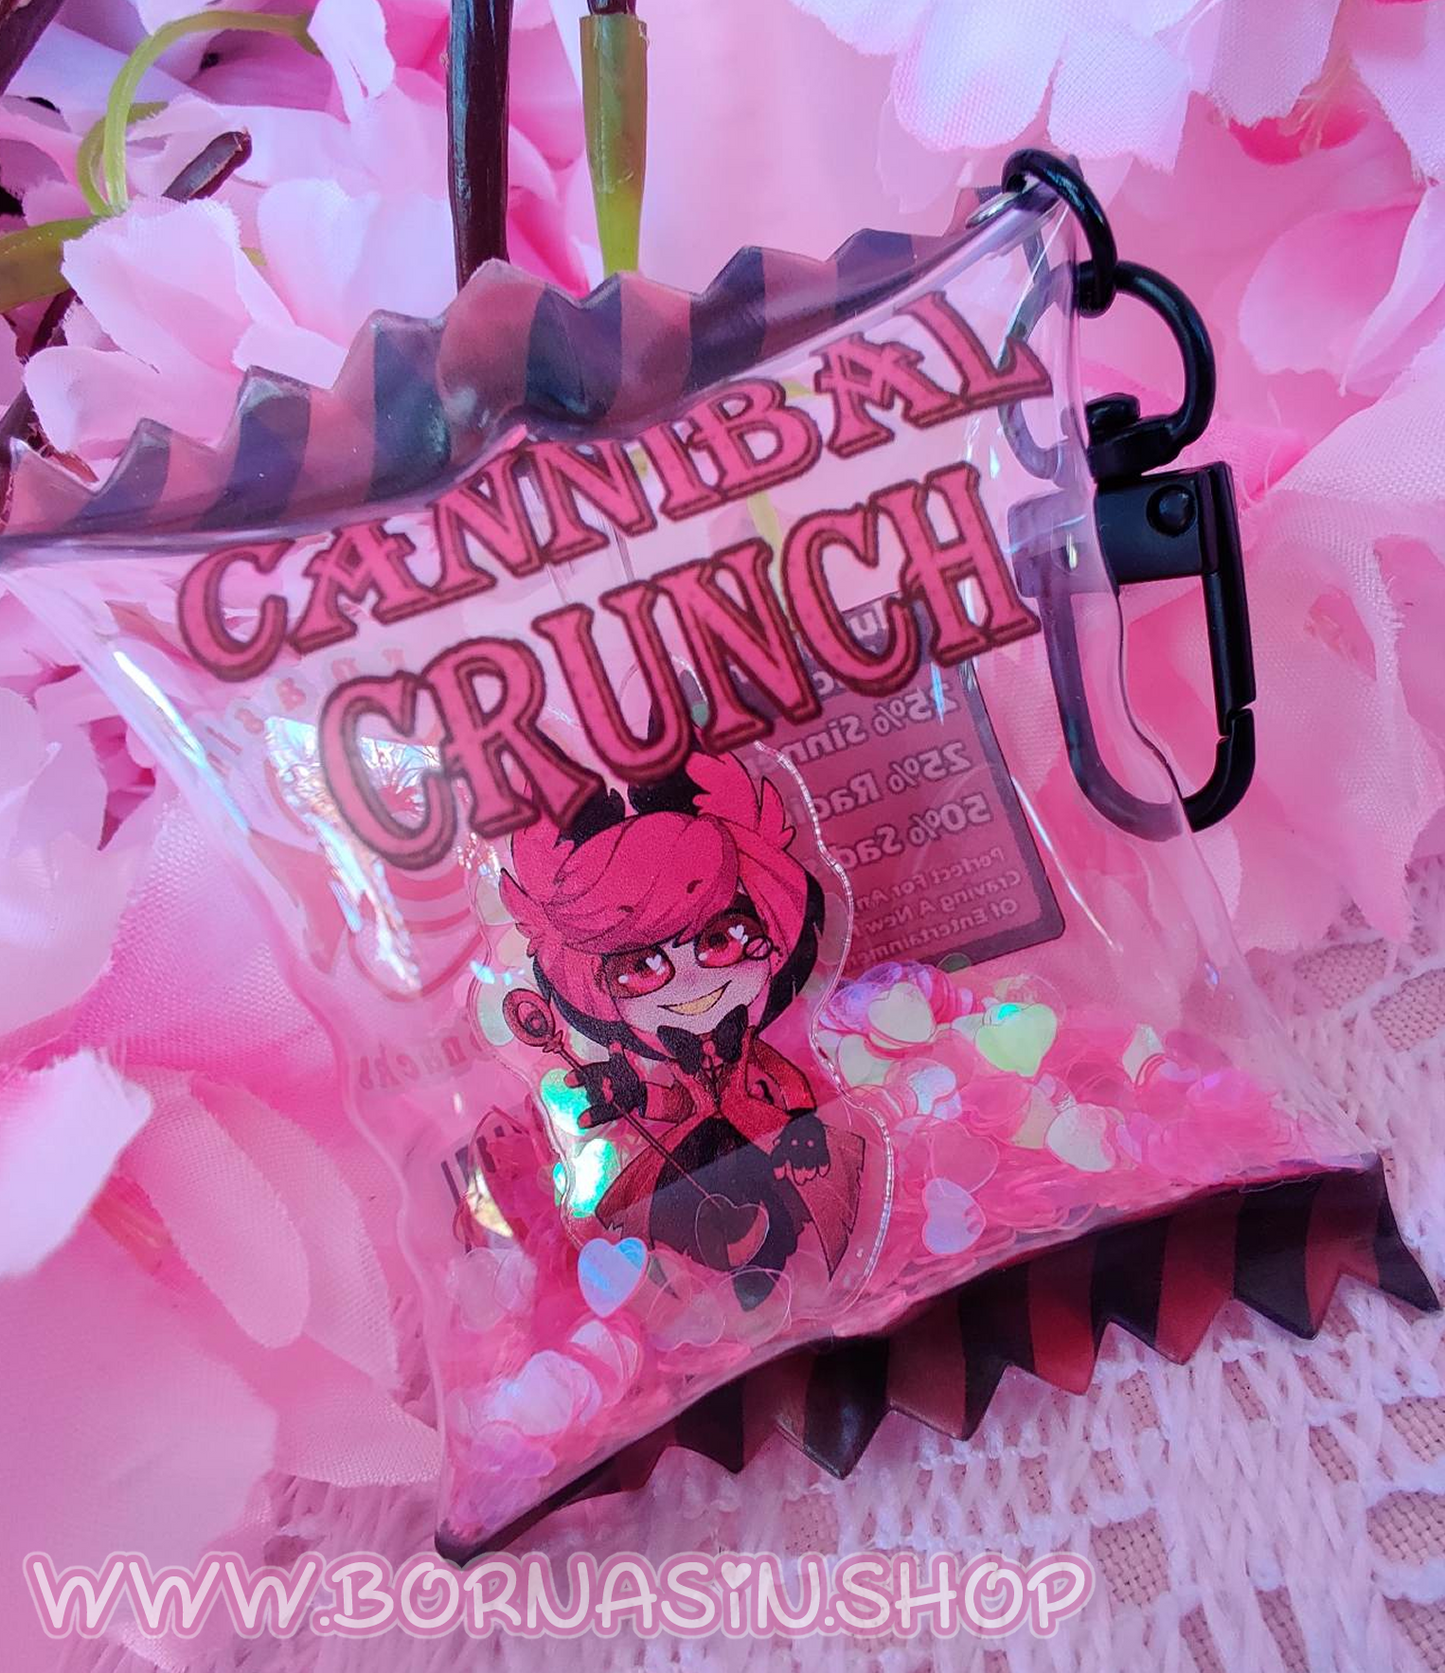 Cannibal Crunch 3d Candy bag Charm